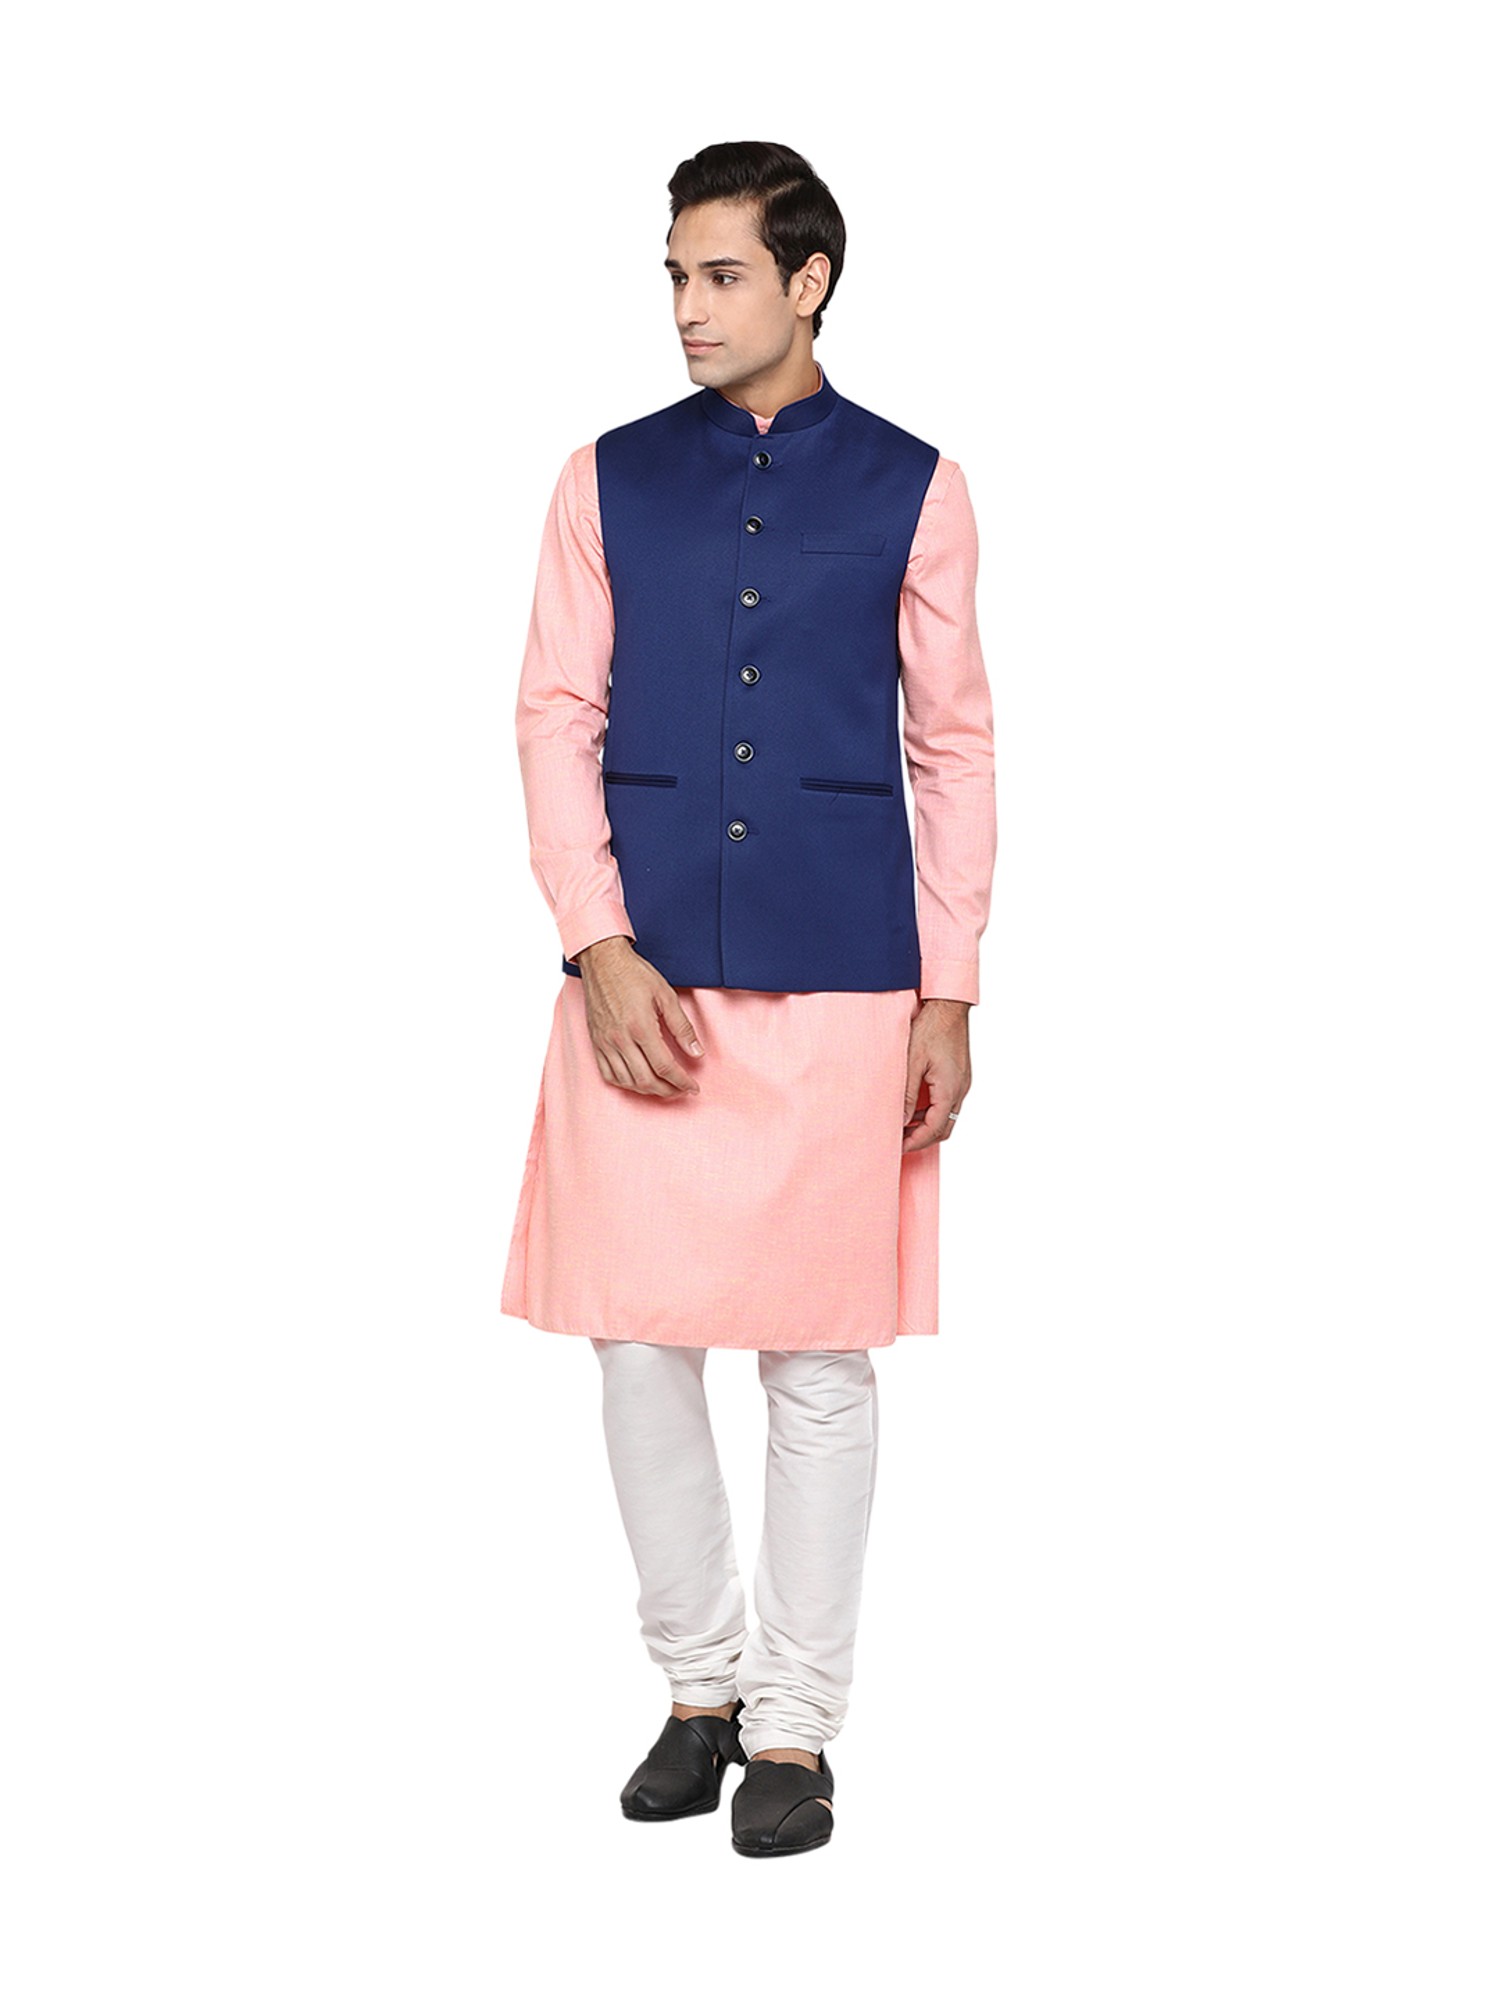 Buy Badoliya & Sons Modi Jacket for Men's (Royal Blue) (36) at Amazon.in